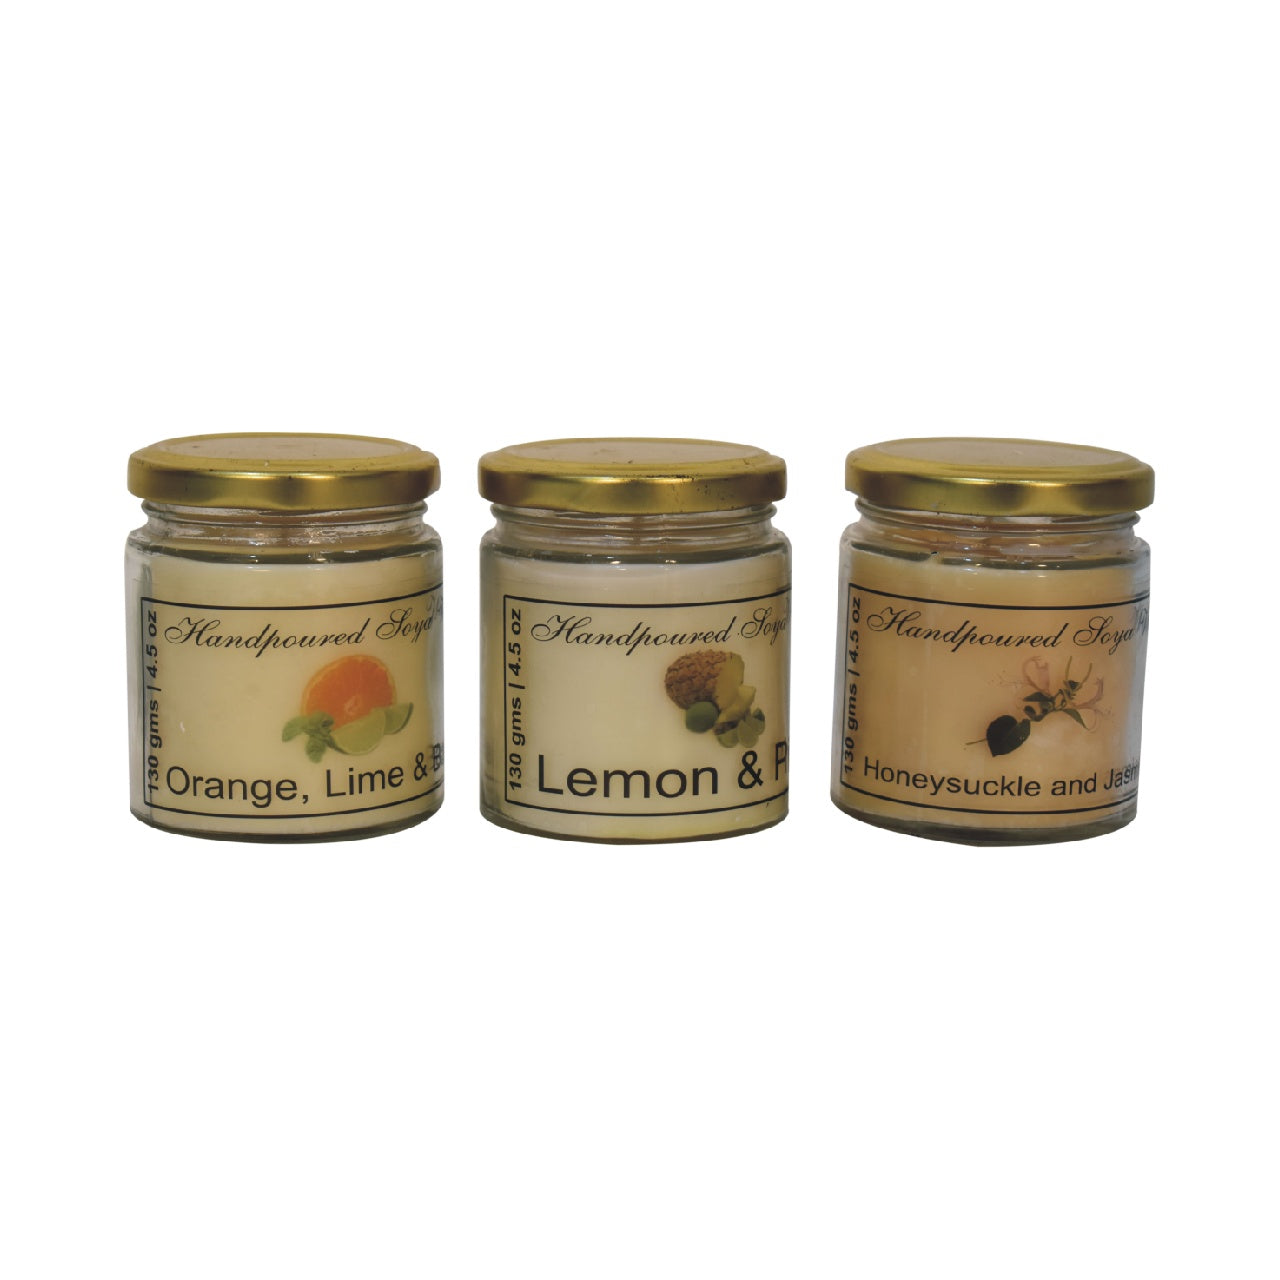 View Candle Gift Set of 3 Orange Lime Basil Lemon Pine Honeysuckle Jasmine information